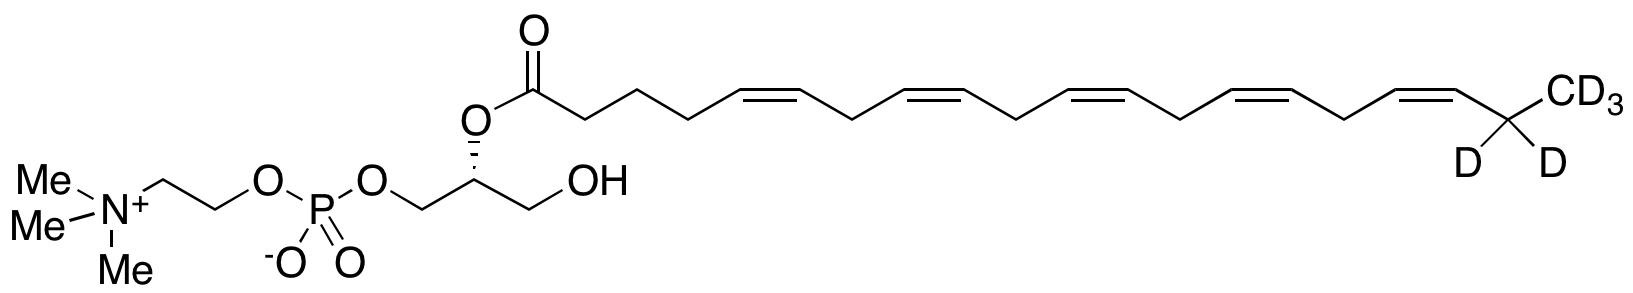 2-Eicosapentaenoyl-sn-glycerol-3-phosphocholine-d5